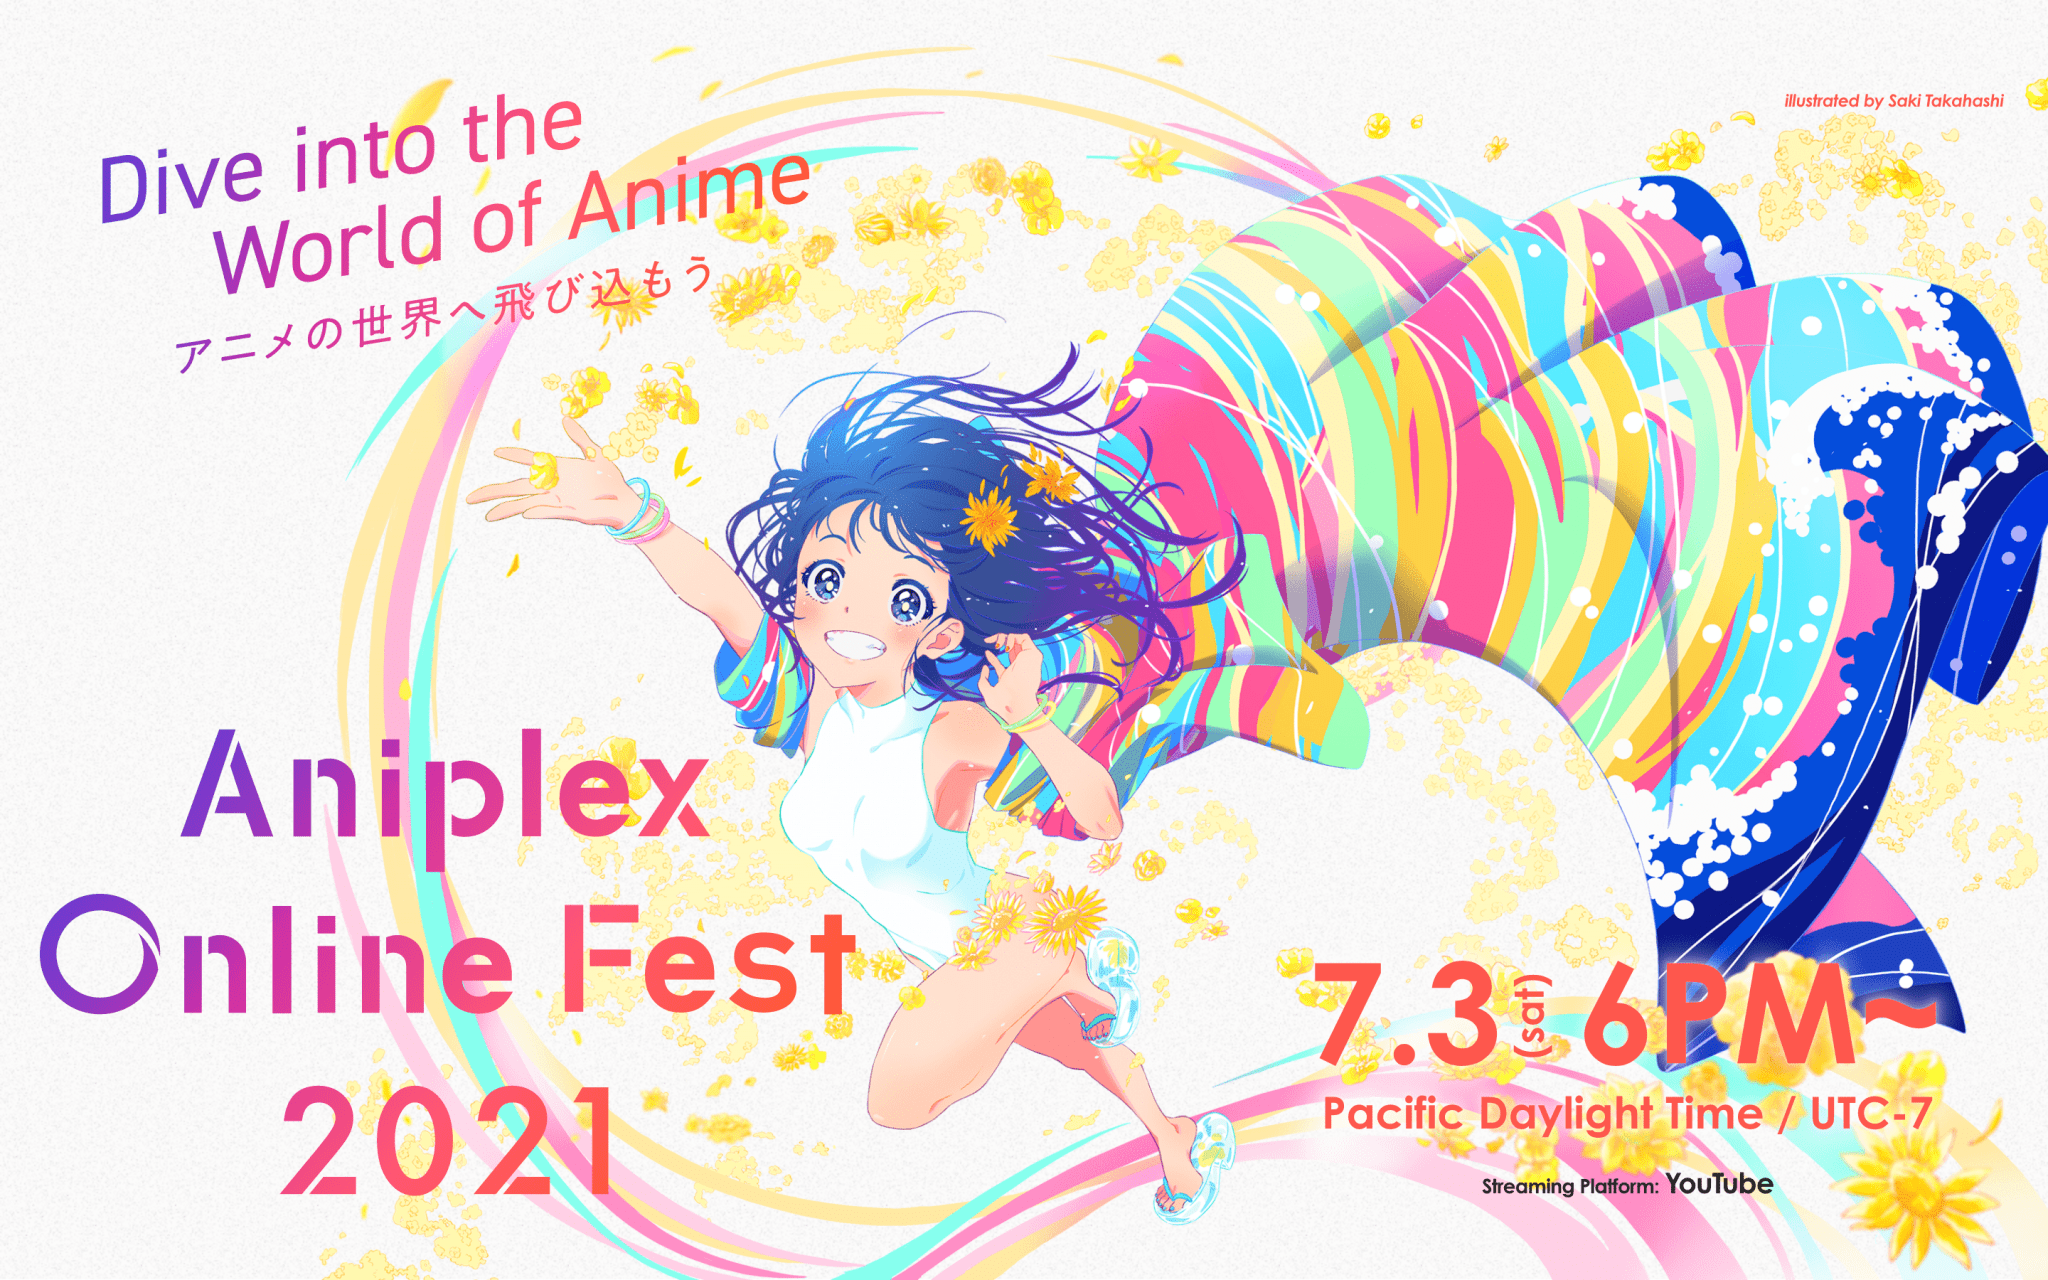 Aniplex Online Fest 2021 Why You Should Watch